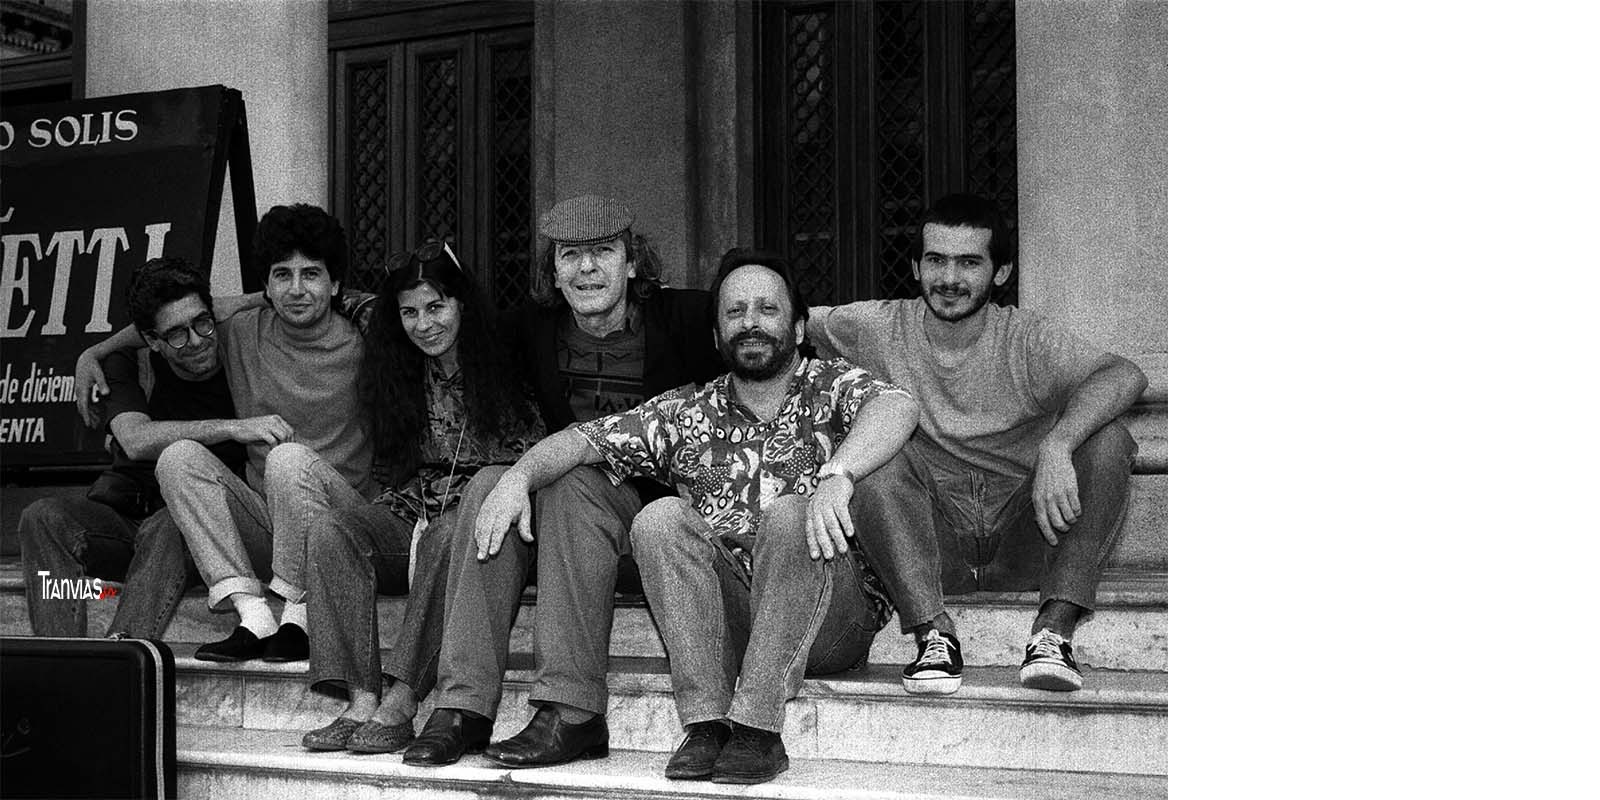 C.da Silveira, G.Etchenique, M.Ingold, D.Viglietti, O.Fattoruso, P.Somma, foto aldo novick, 1992